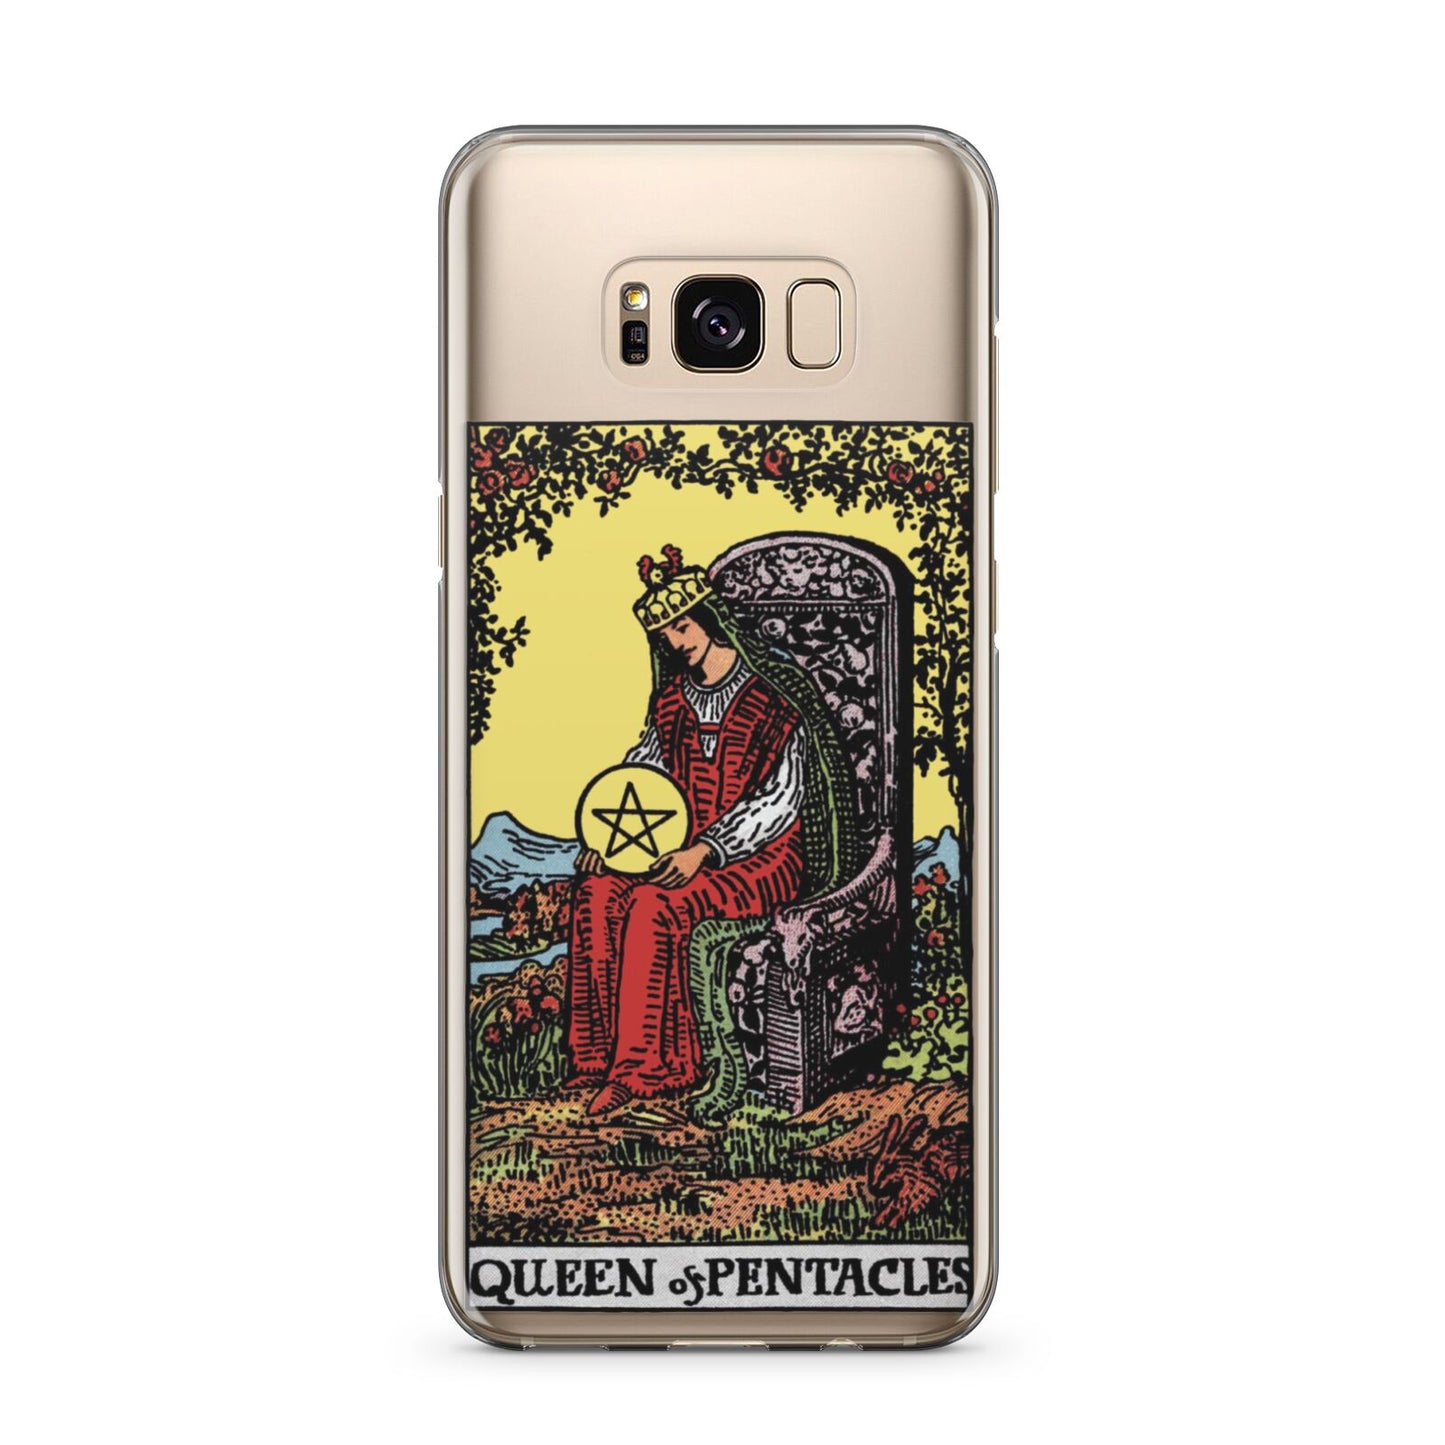 Queen of Pentacles Tarot Card Samsung Galaxy S8 Plus Case